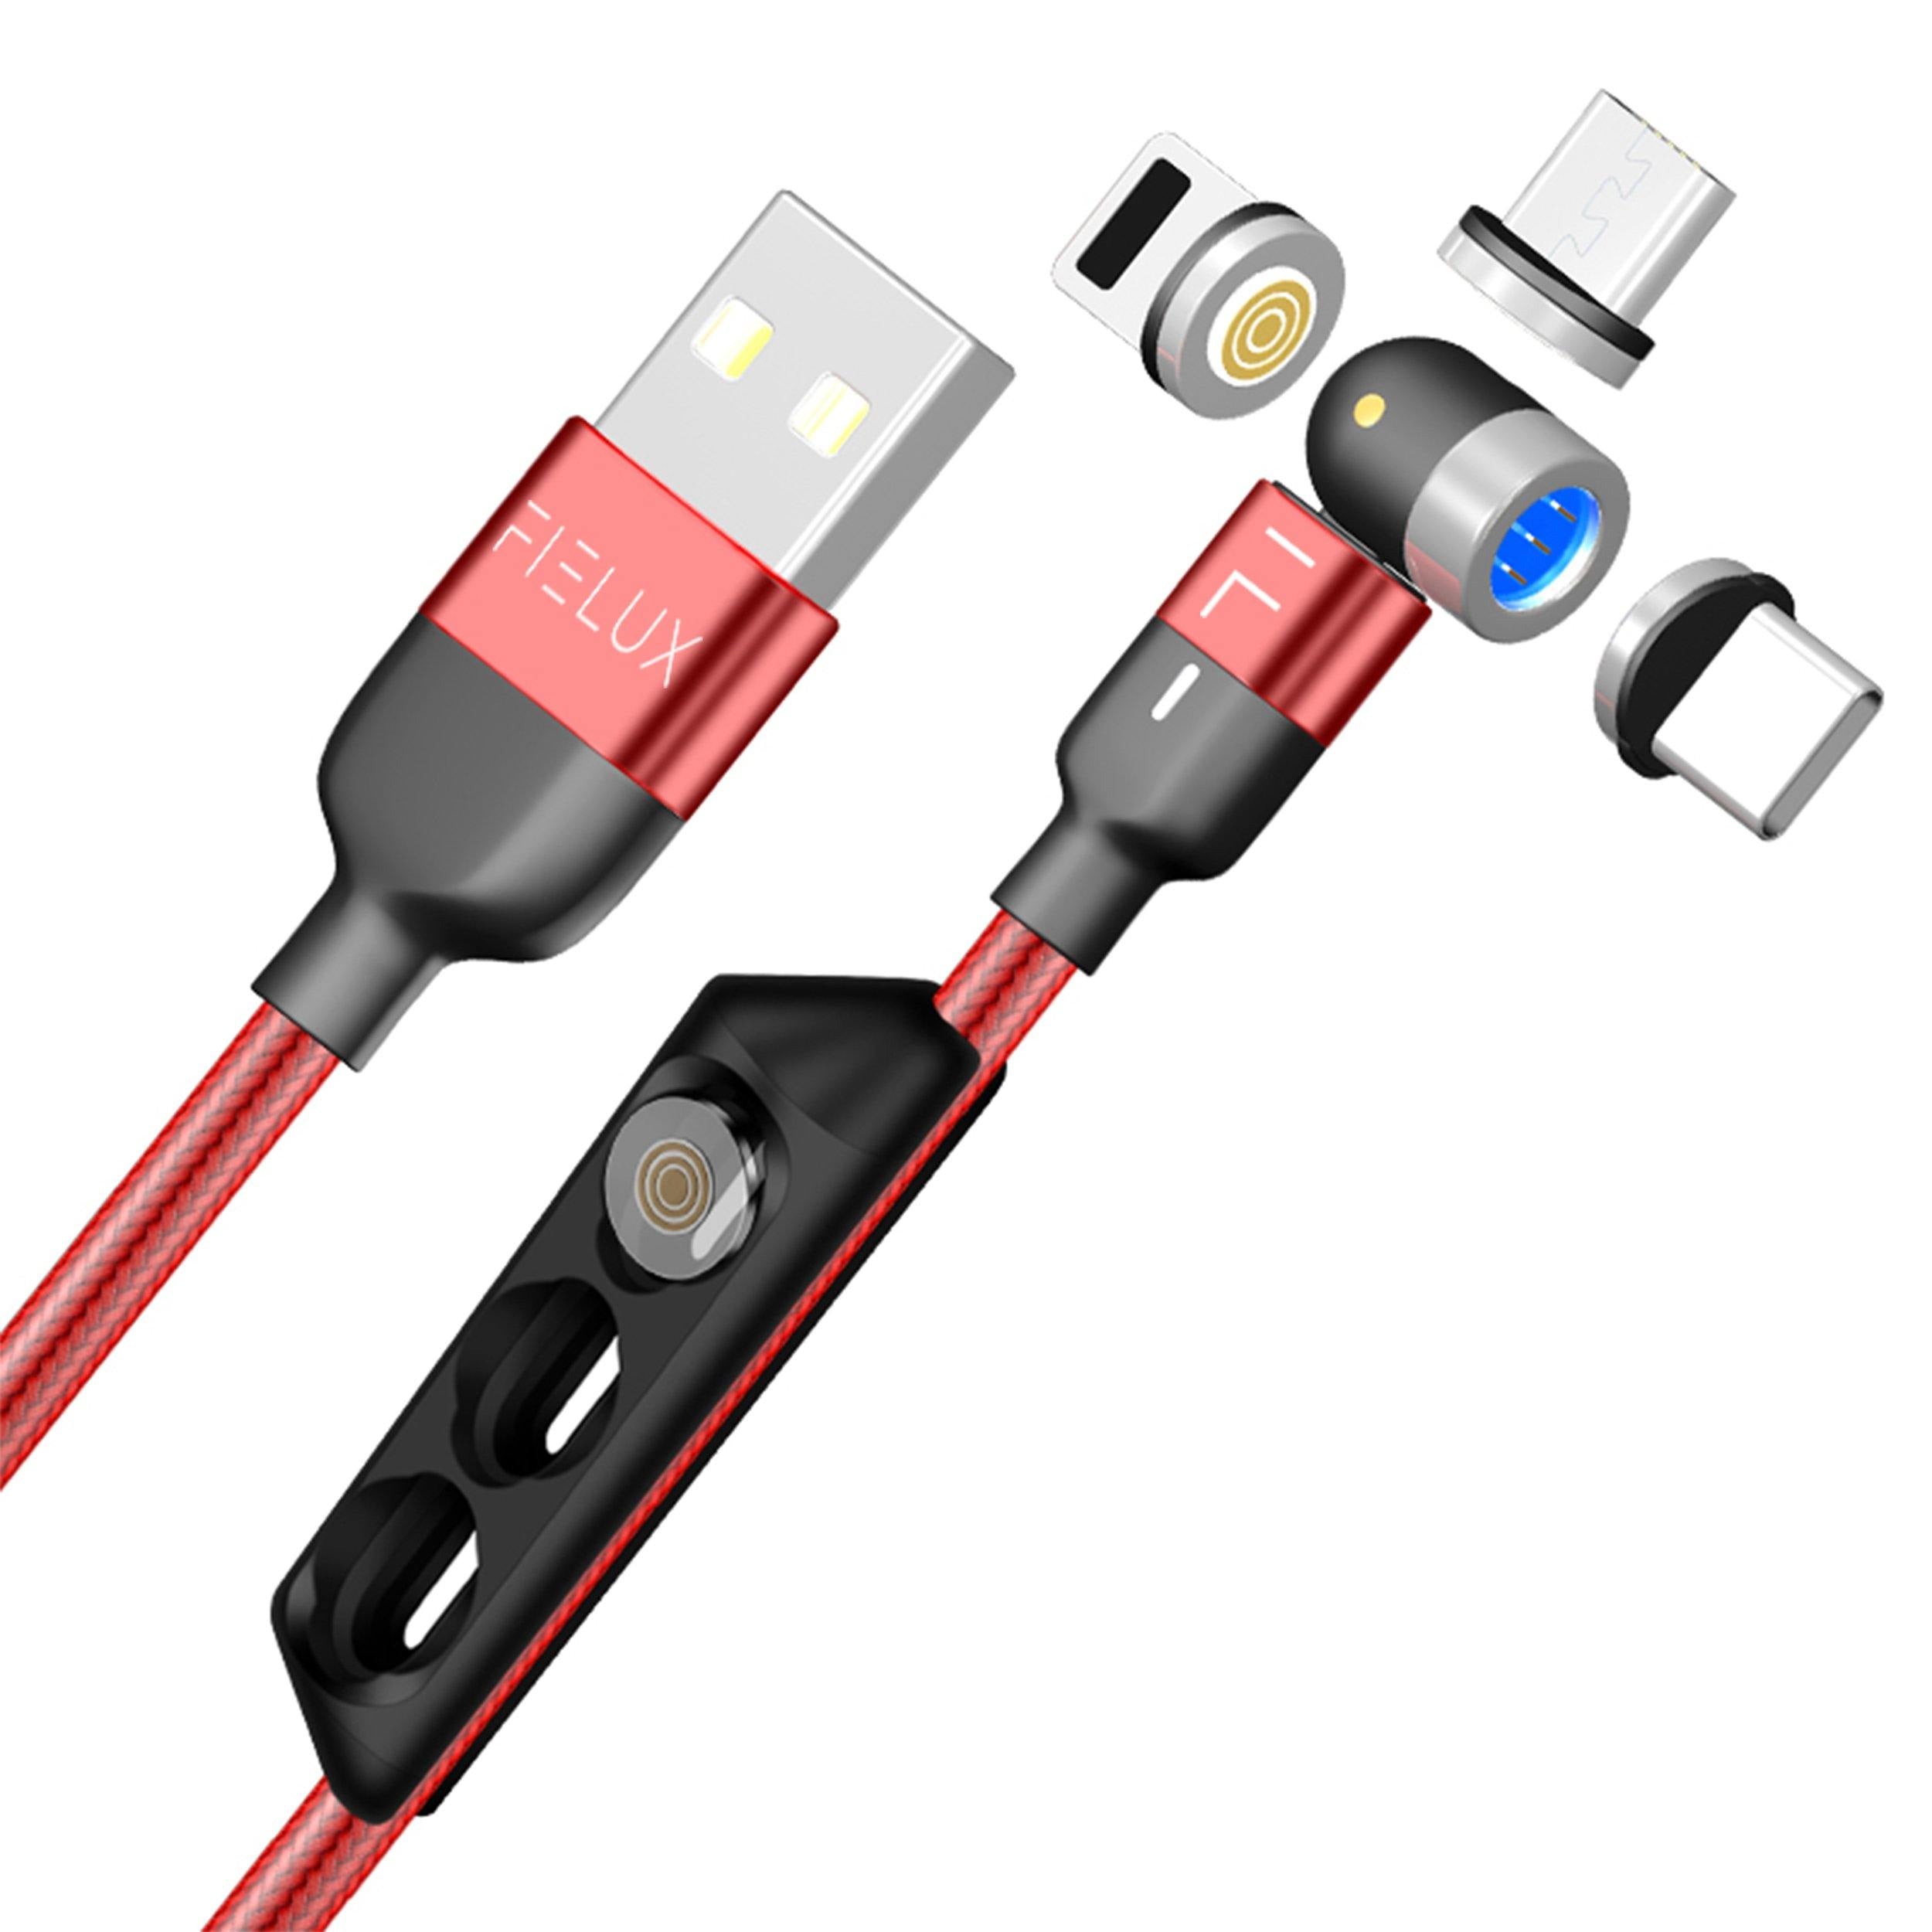 Câble USB double sens (1m) vers USB type C / Micro USB / Lightning, Micro  USB